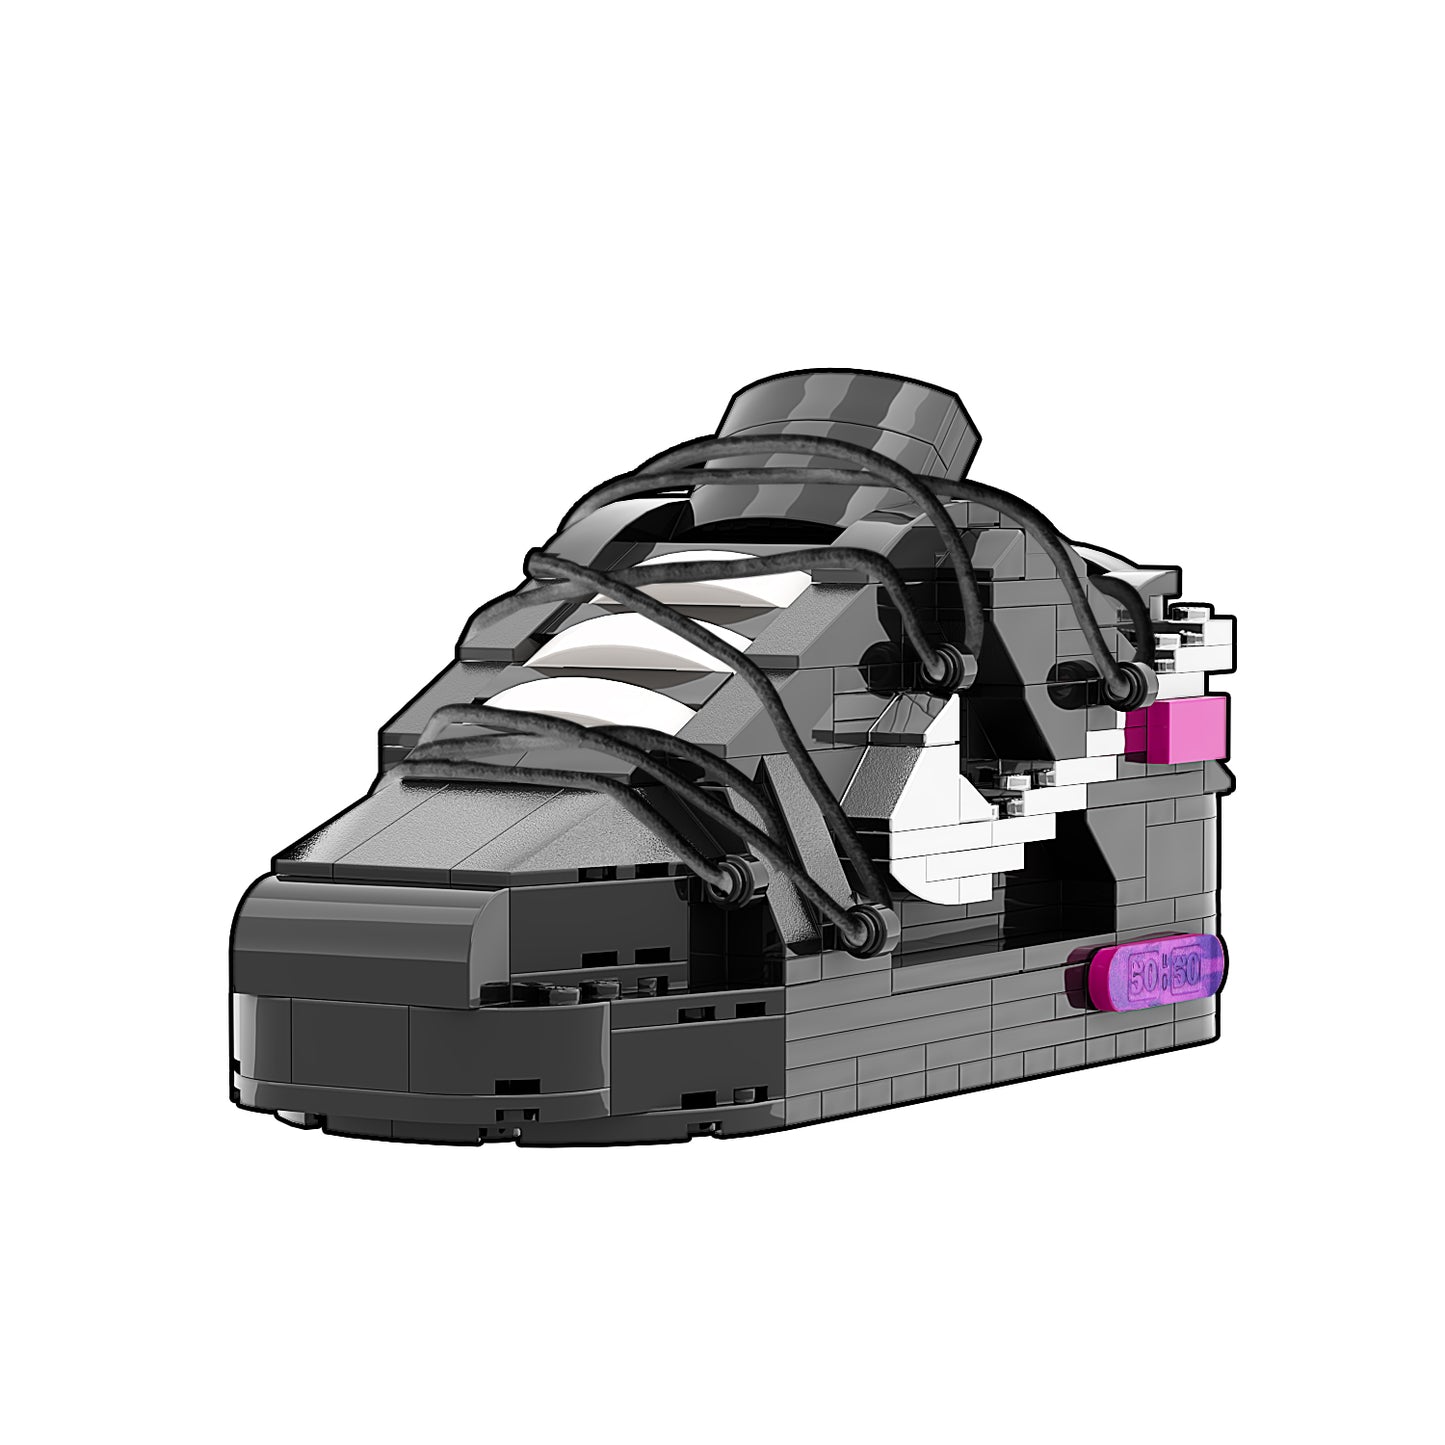 REGULAR SB Dunk "Off-White Lot 50" Sneaker Bricks with Mini Figure